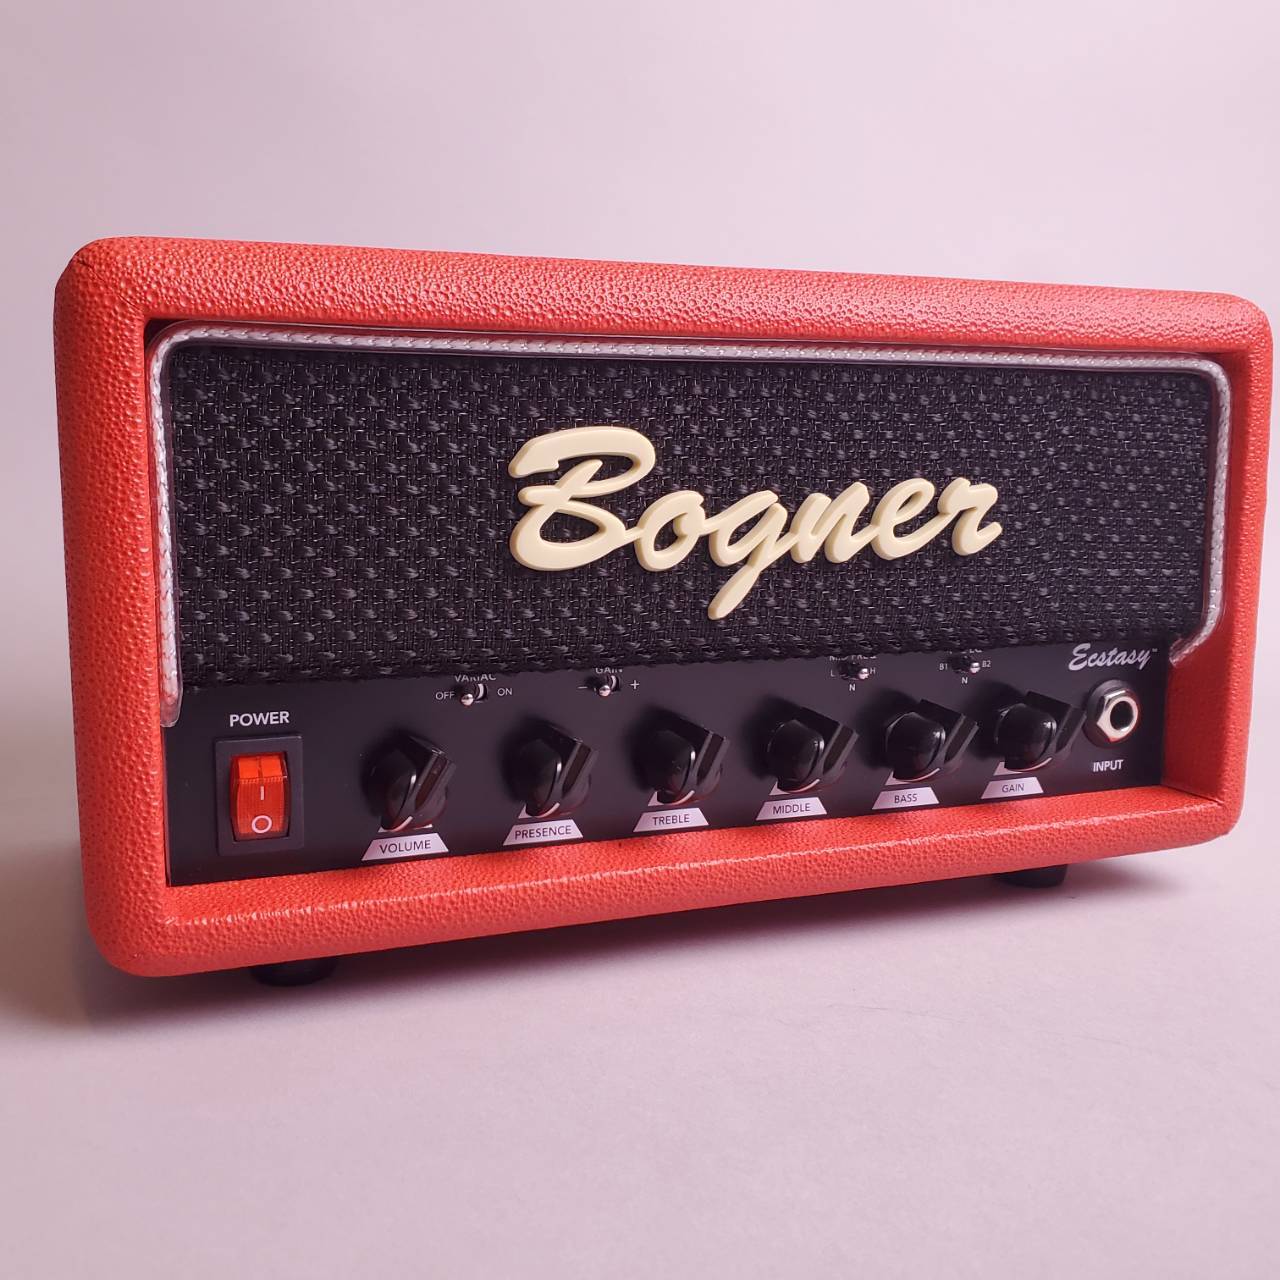 BOGNER ( ボグナー ) Ecstasy Red Estasy Red - エフェクター